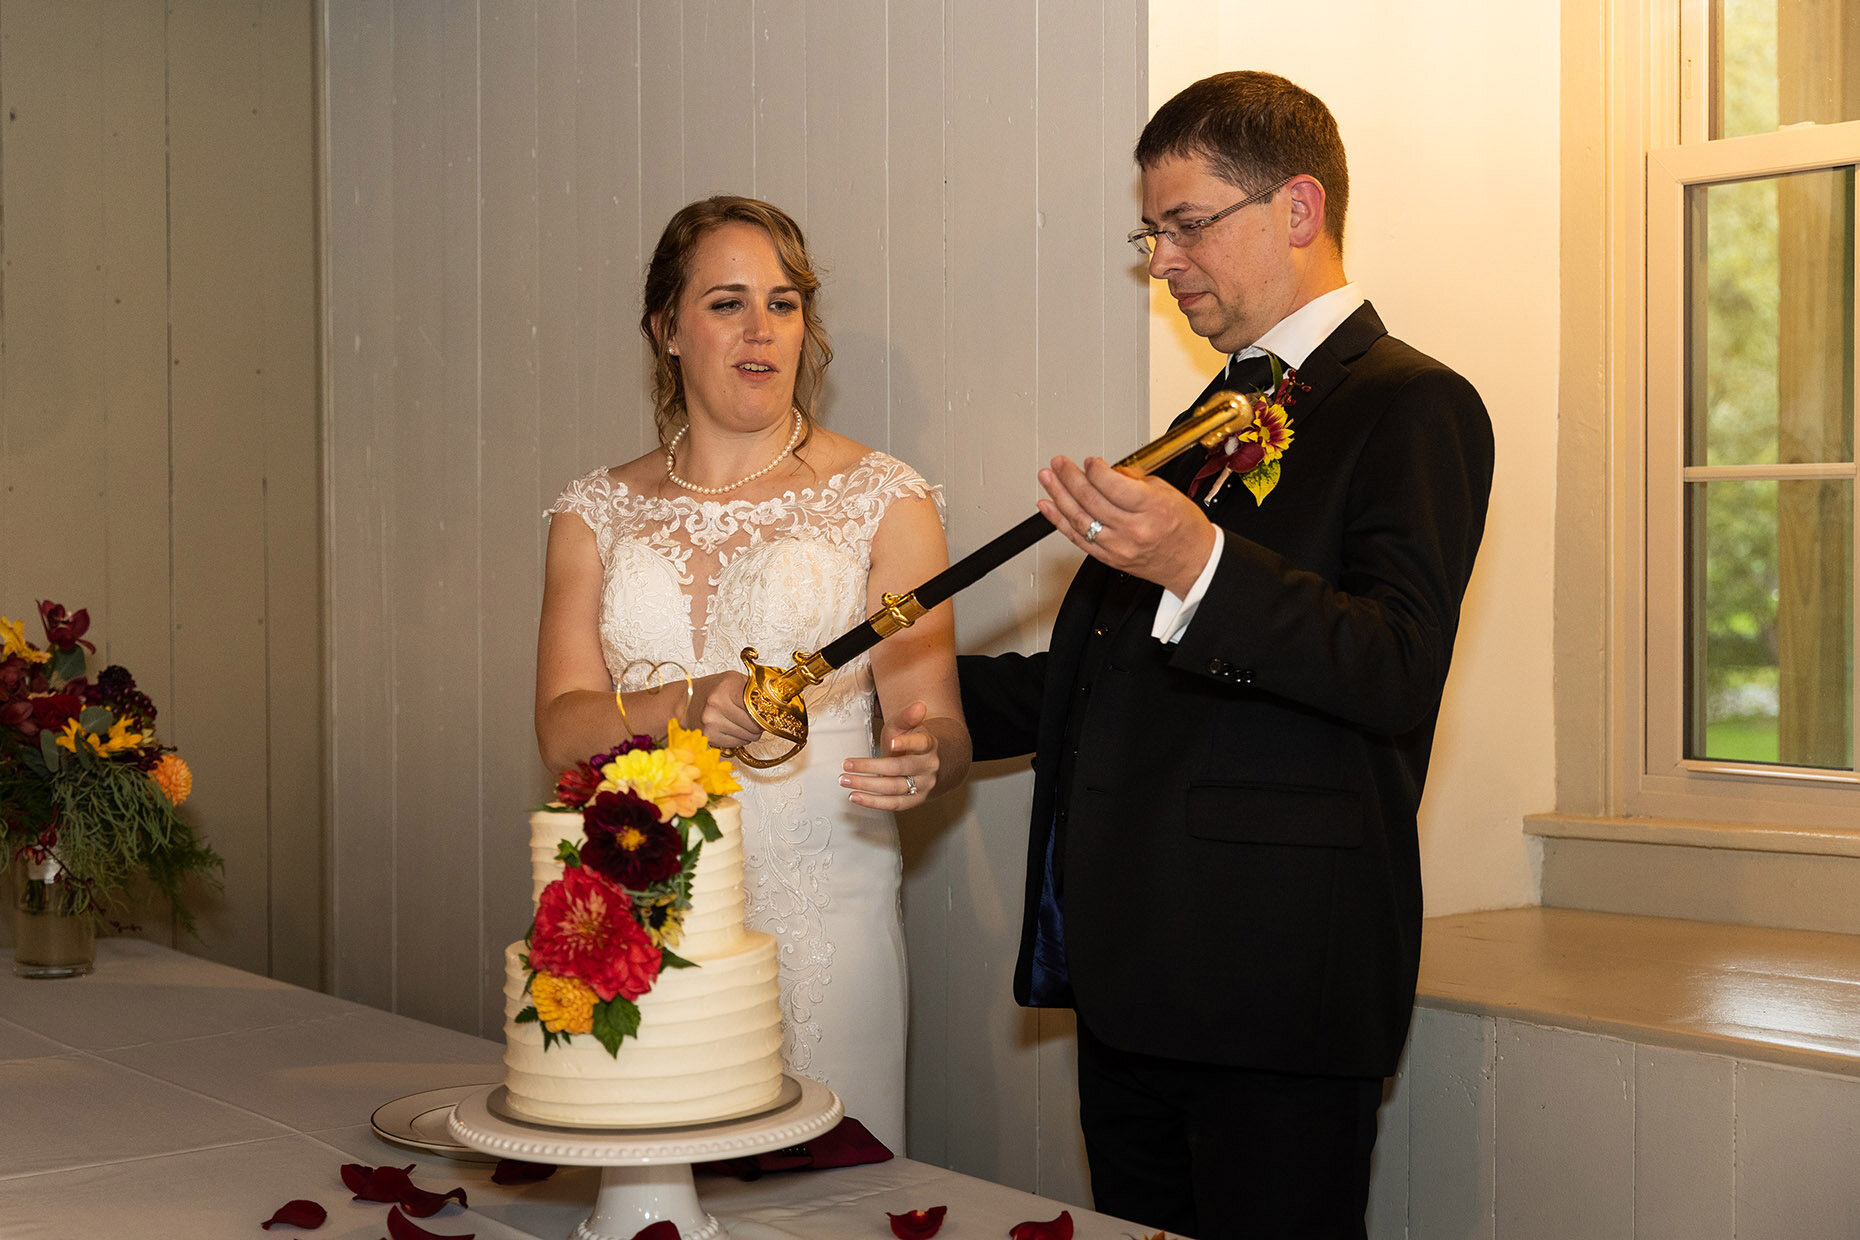 Bride &amp; Groom cut wedding cake with sword